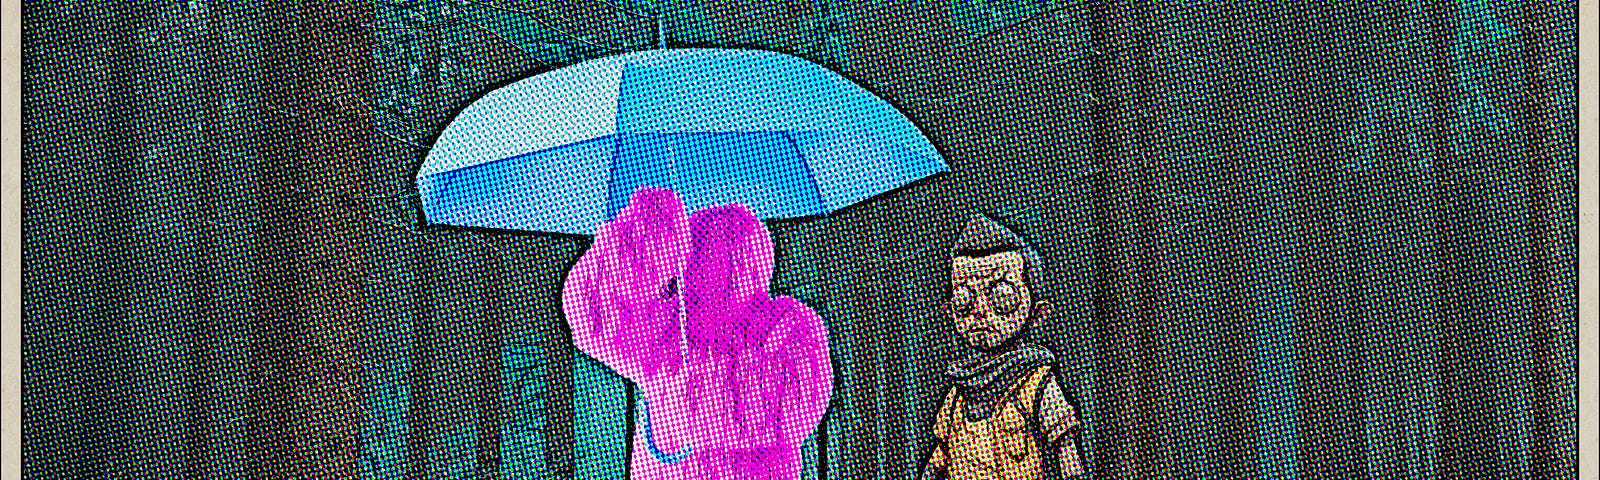 Action hero spies on reader opening umbrella